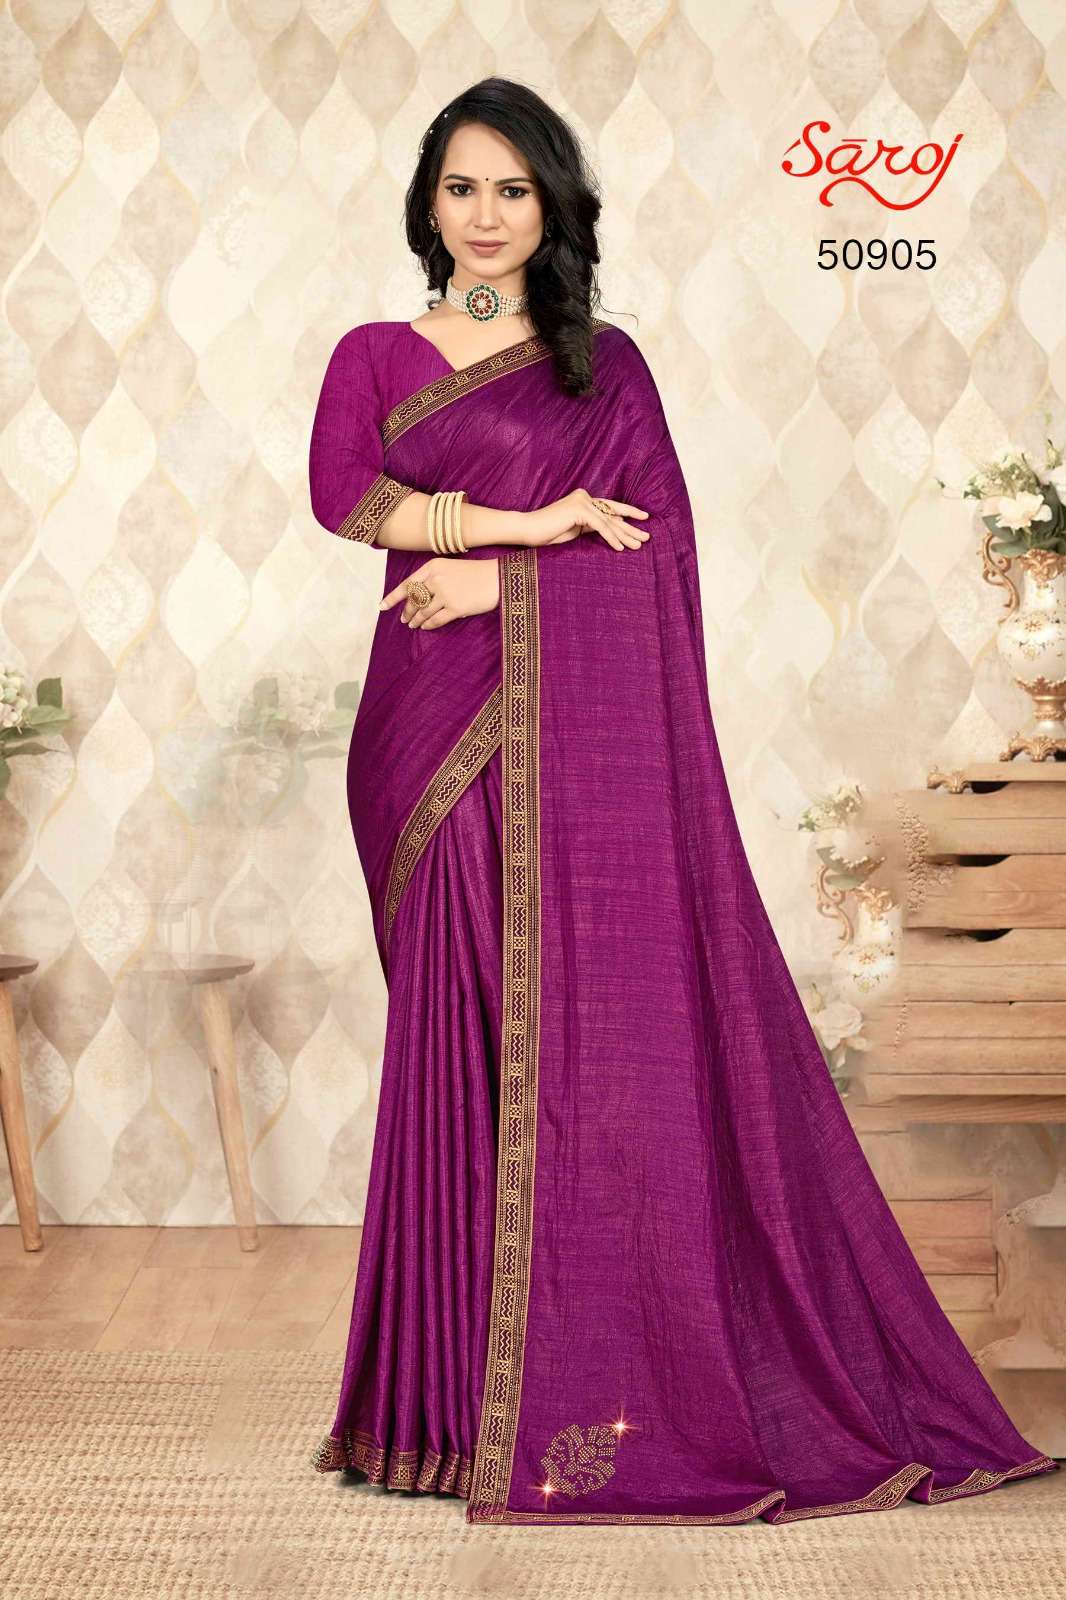 Saroj textile presents Fruit combo-6 Designer casual sarees catalogue